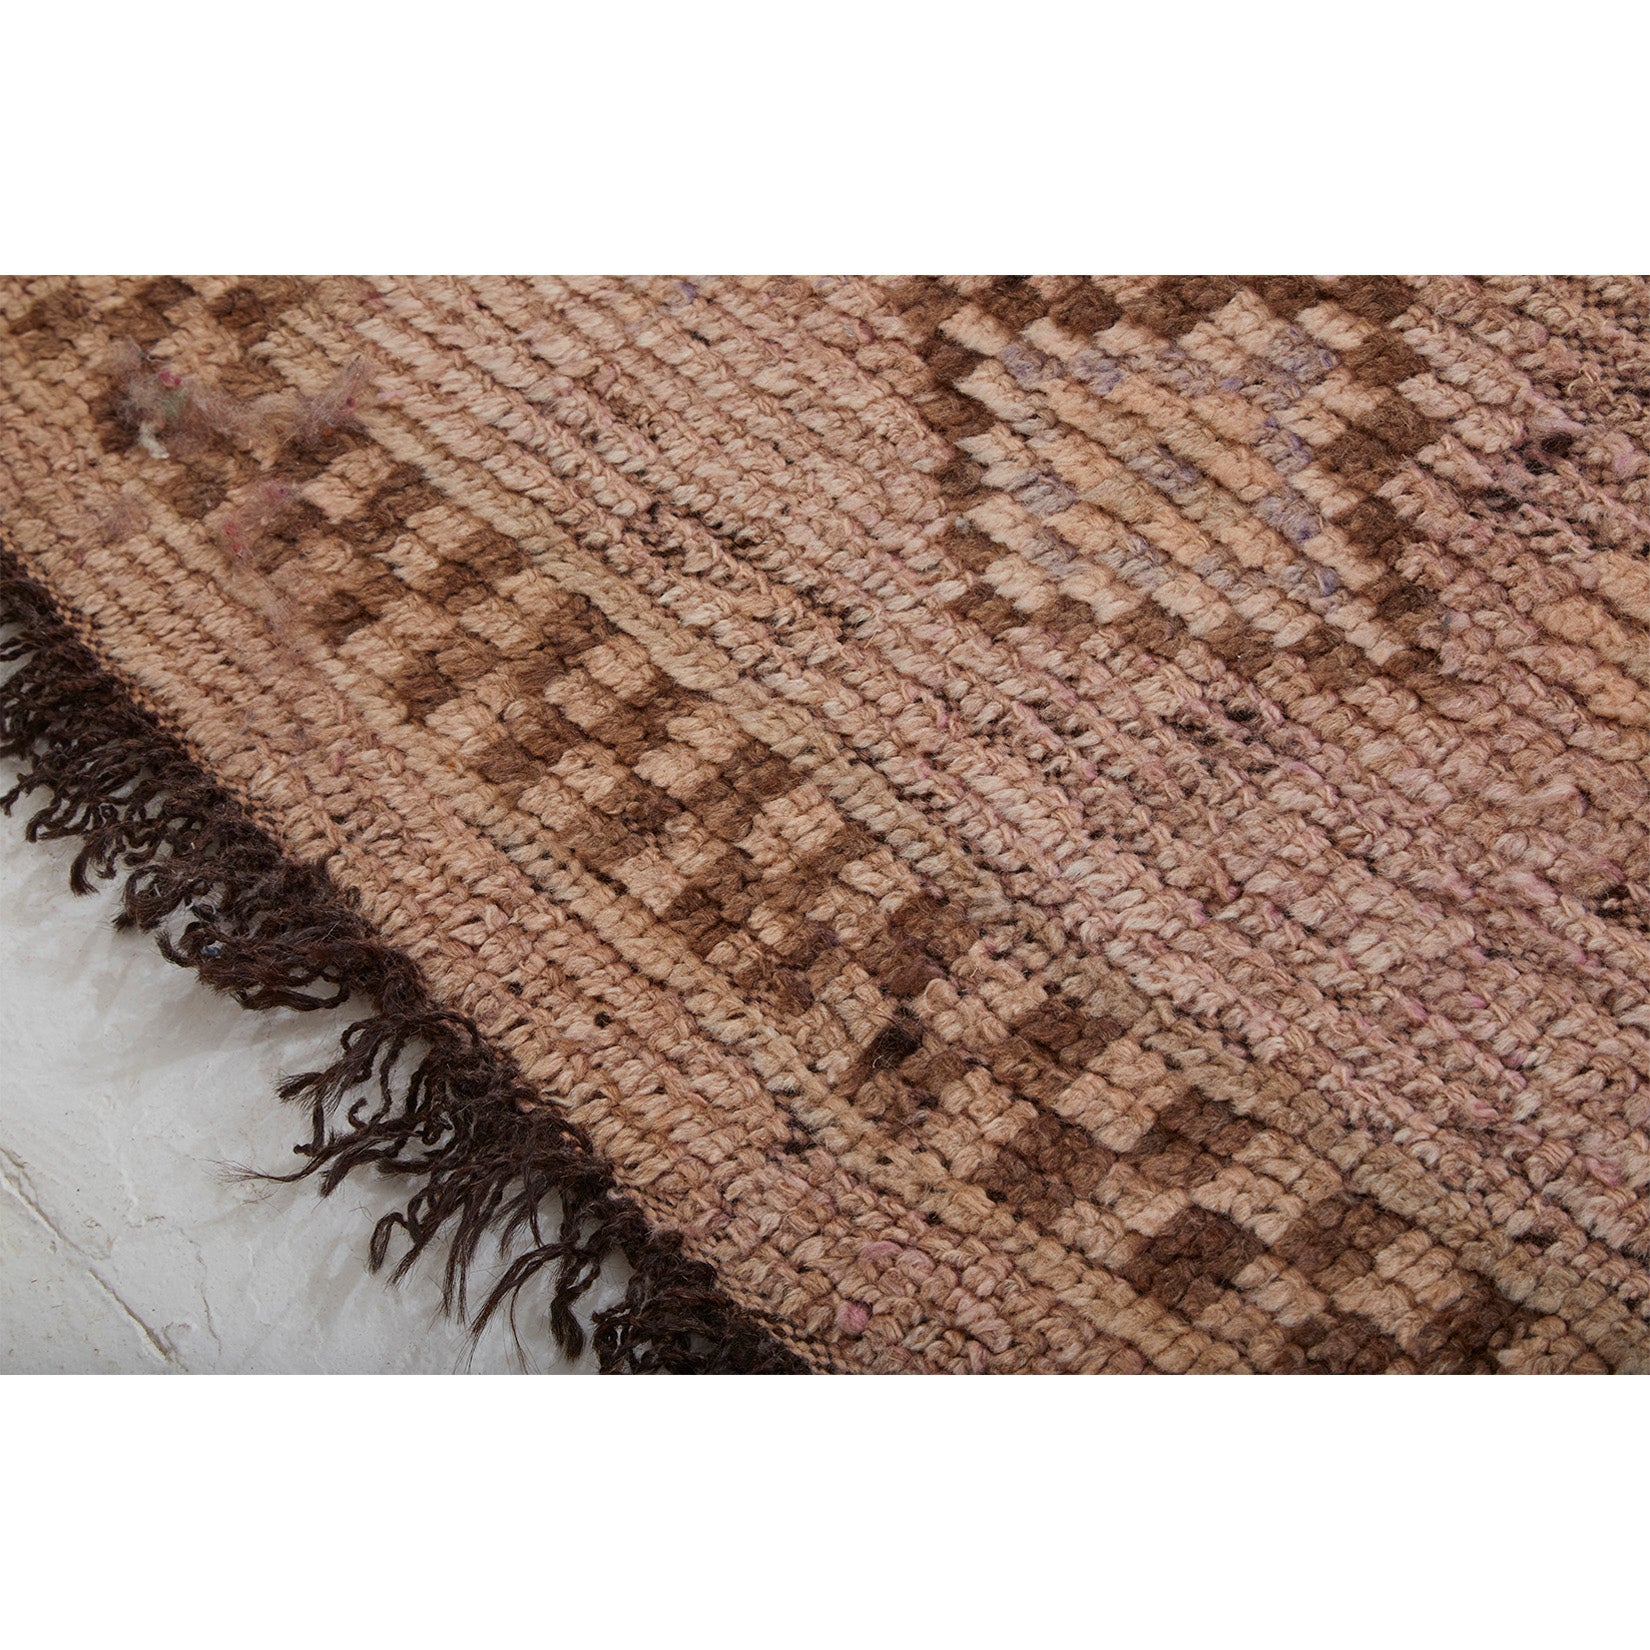 Detail of vintage Moroccan berber rug with brown goat hair fringe